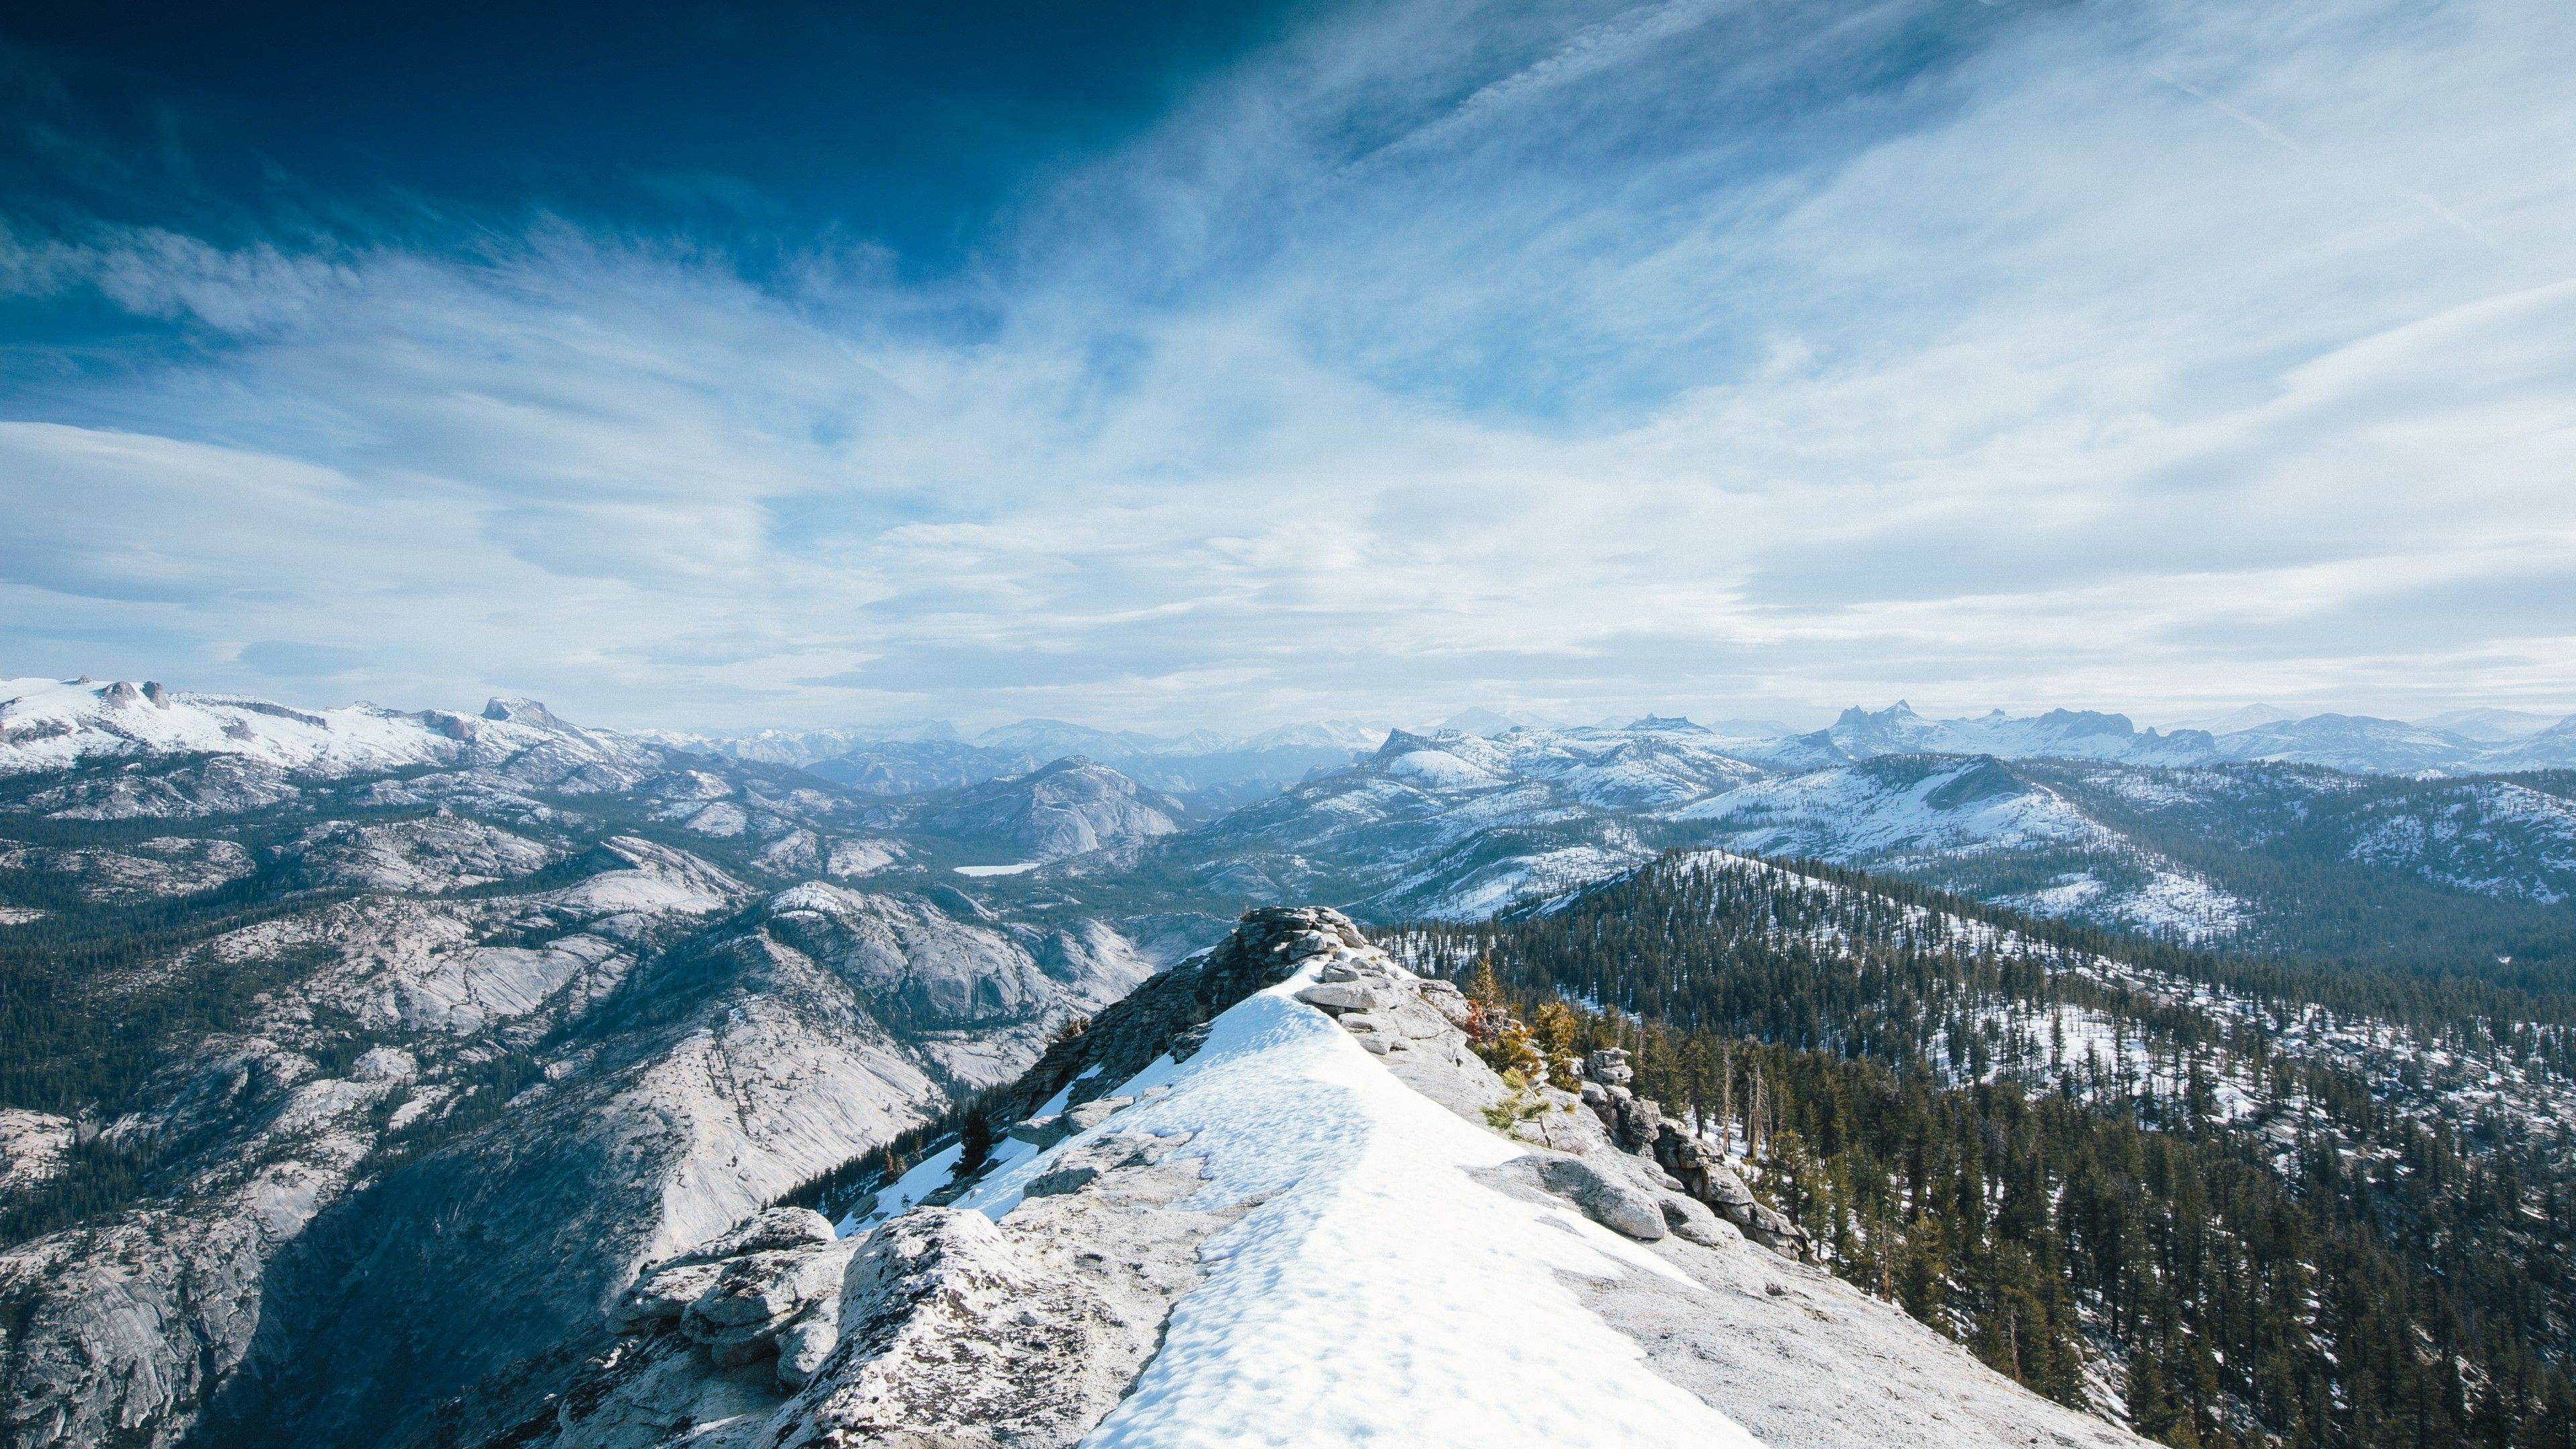 Wallpaper Yosemite, 5k, 4k wallpaper, 8k, winter, snow, forest, OSX, apple, mountains, Nature